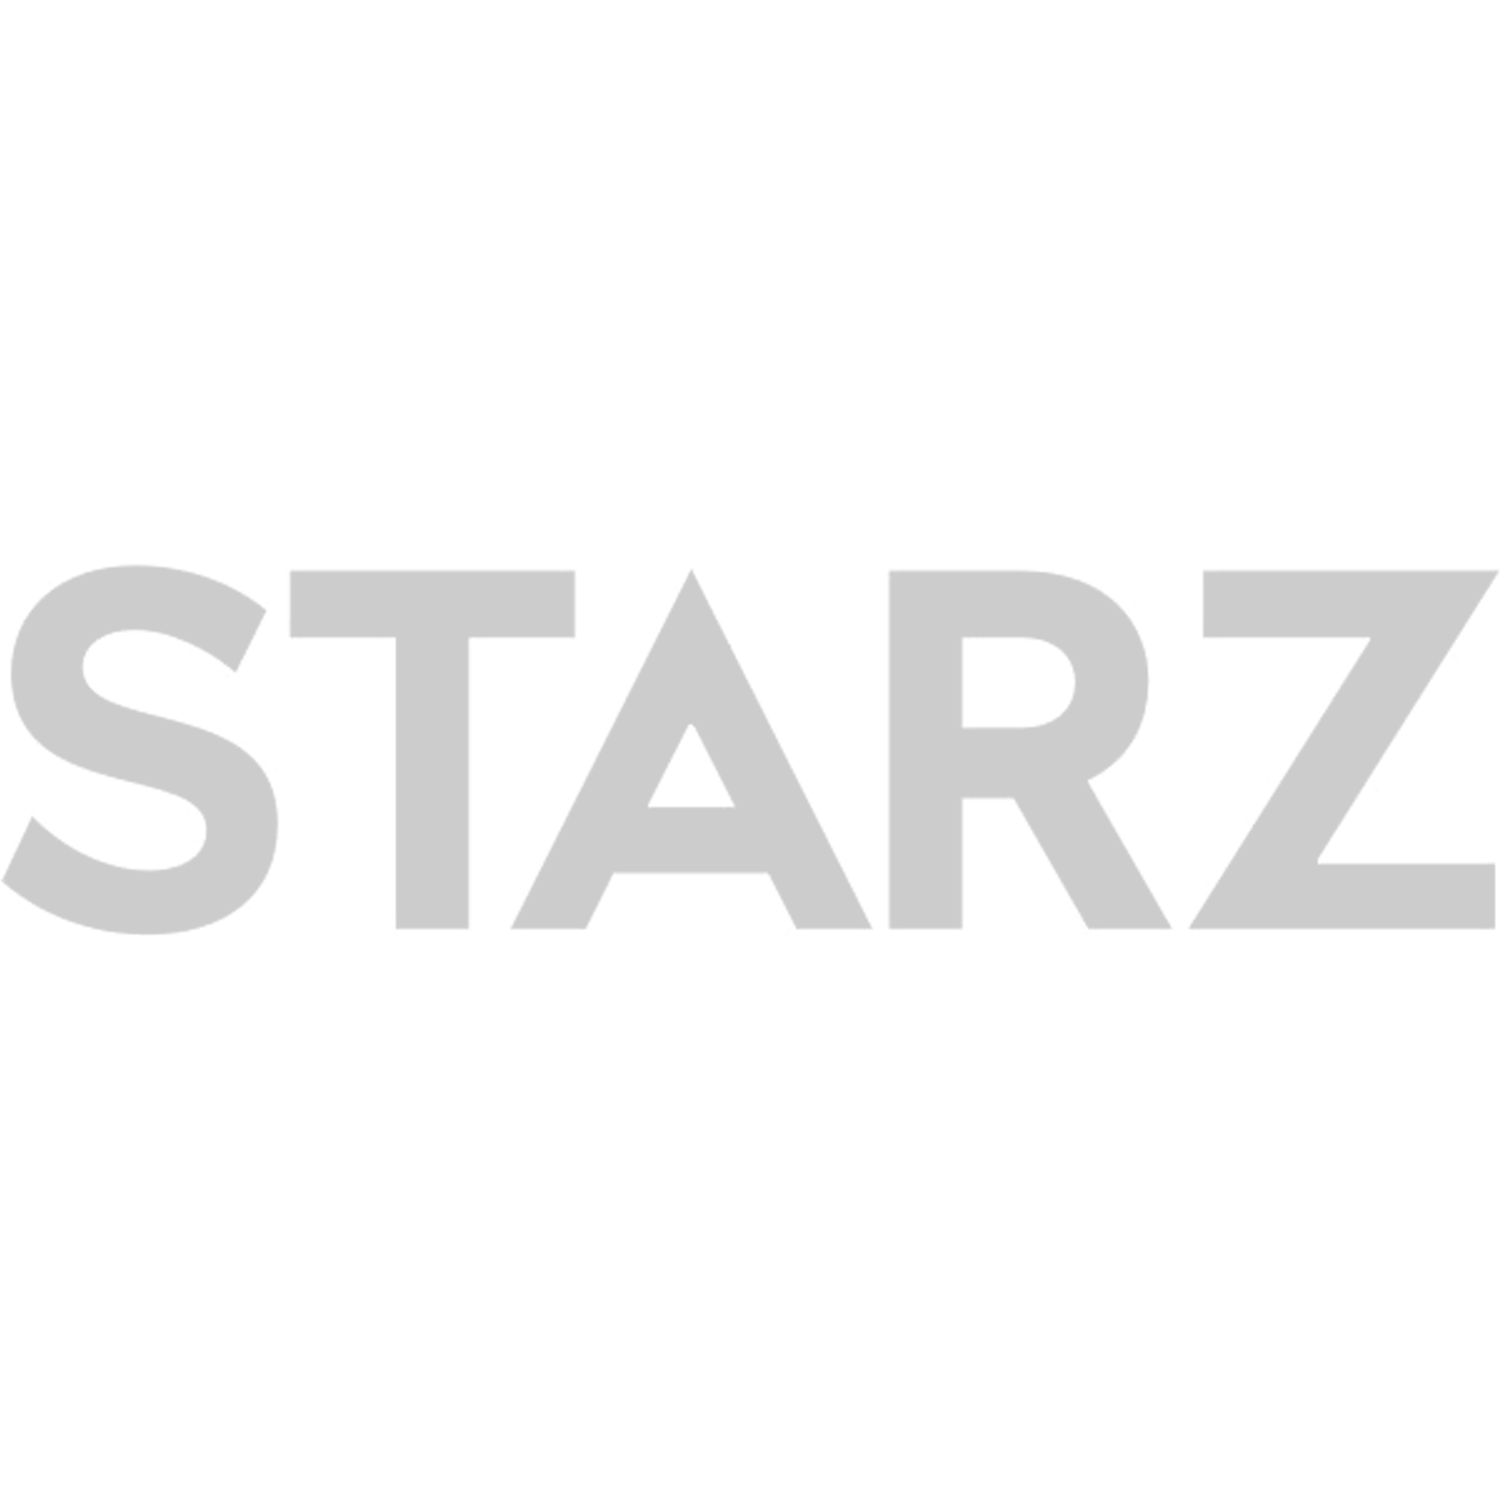 STARZ - light.png